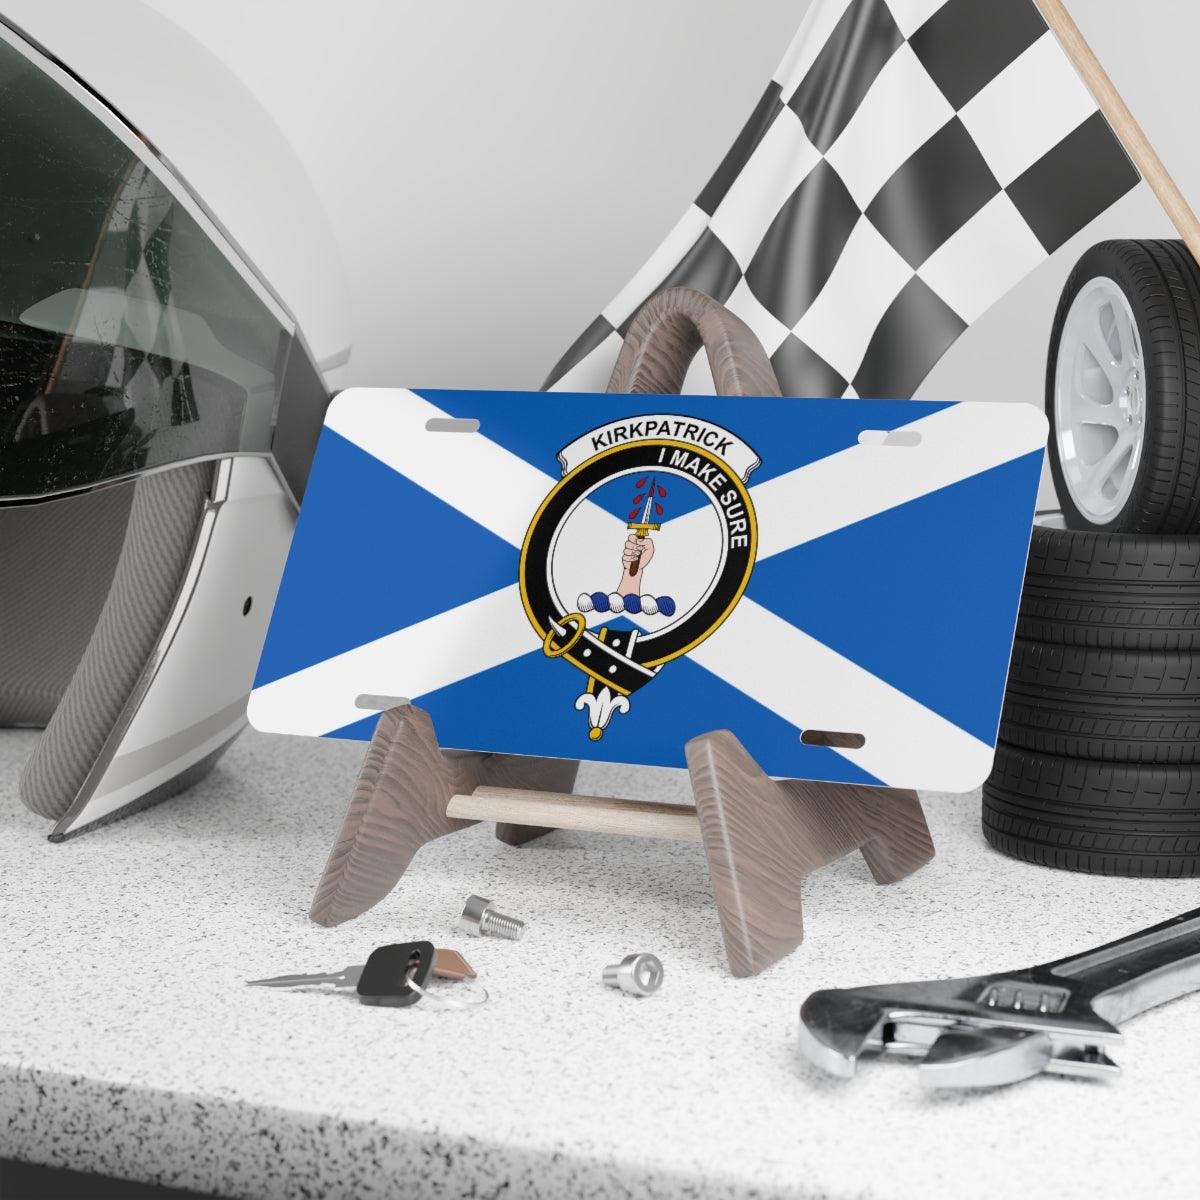 Clan Kirkpatrick Scottish License Plate, St Andrews Flag License Plate, Scotland License Plate, Kirkpatrick Family Crest Scotland